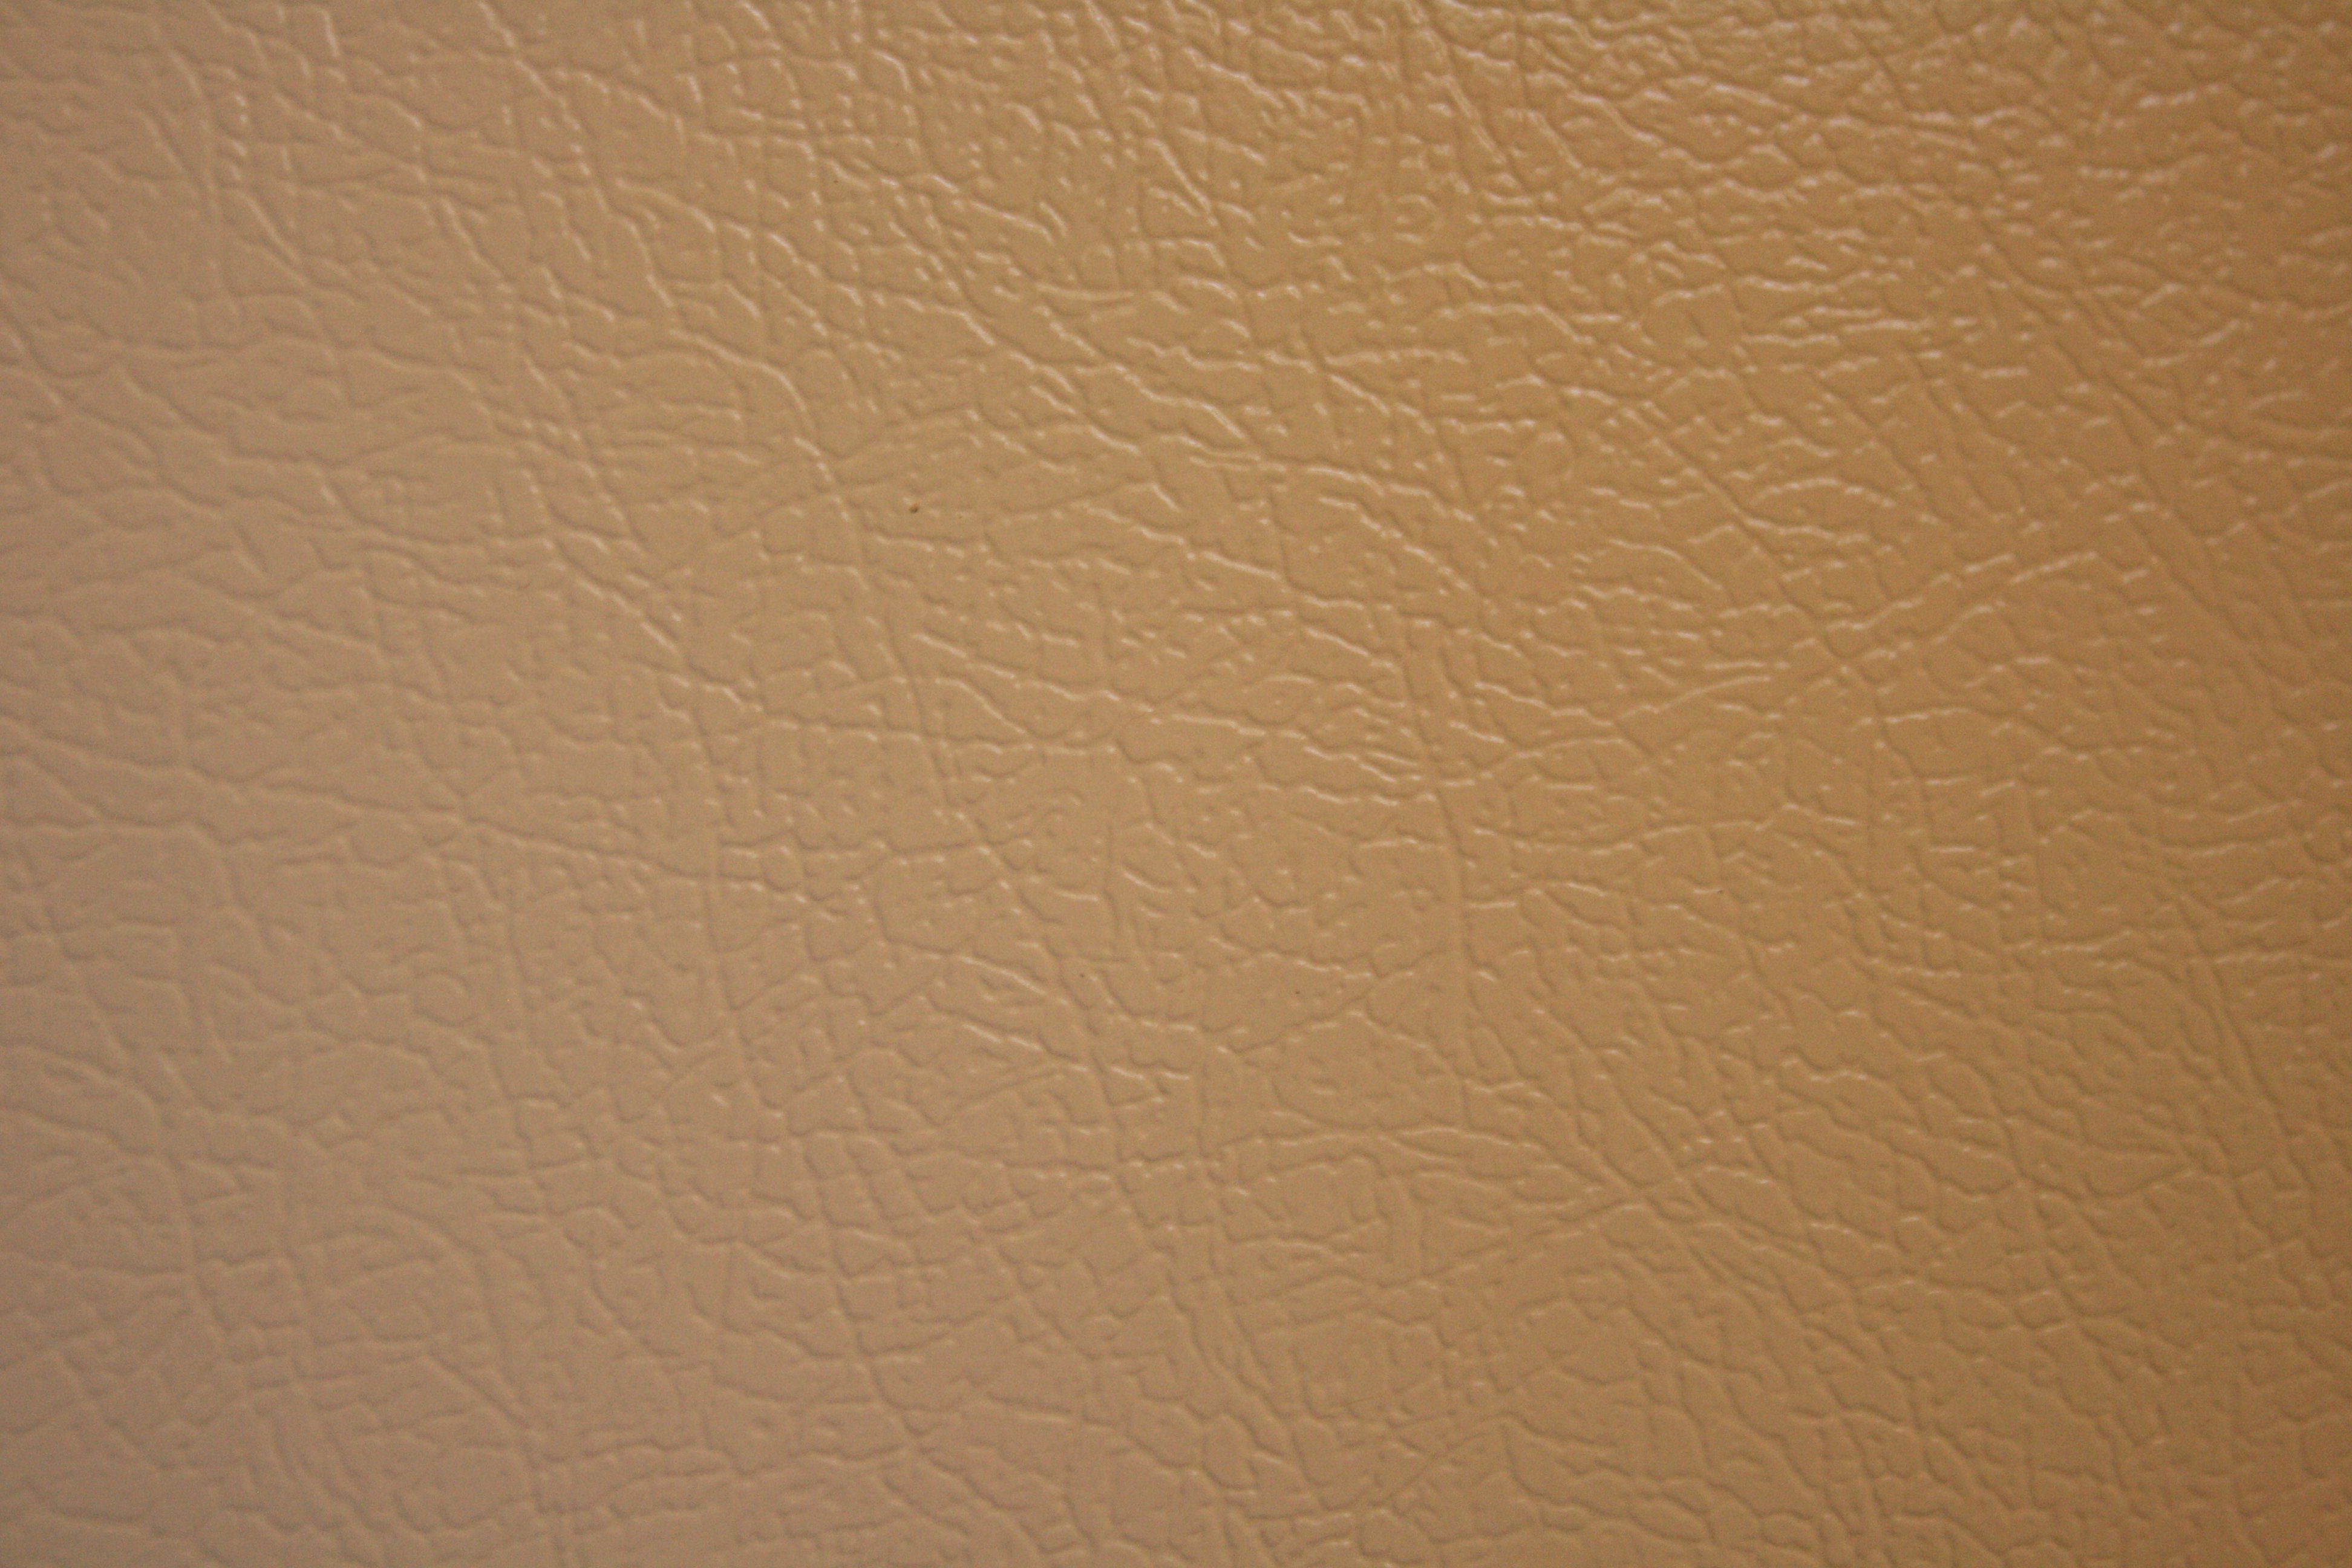 tan wallpaper,brown,beige,ceiling,wall,material property